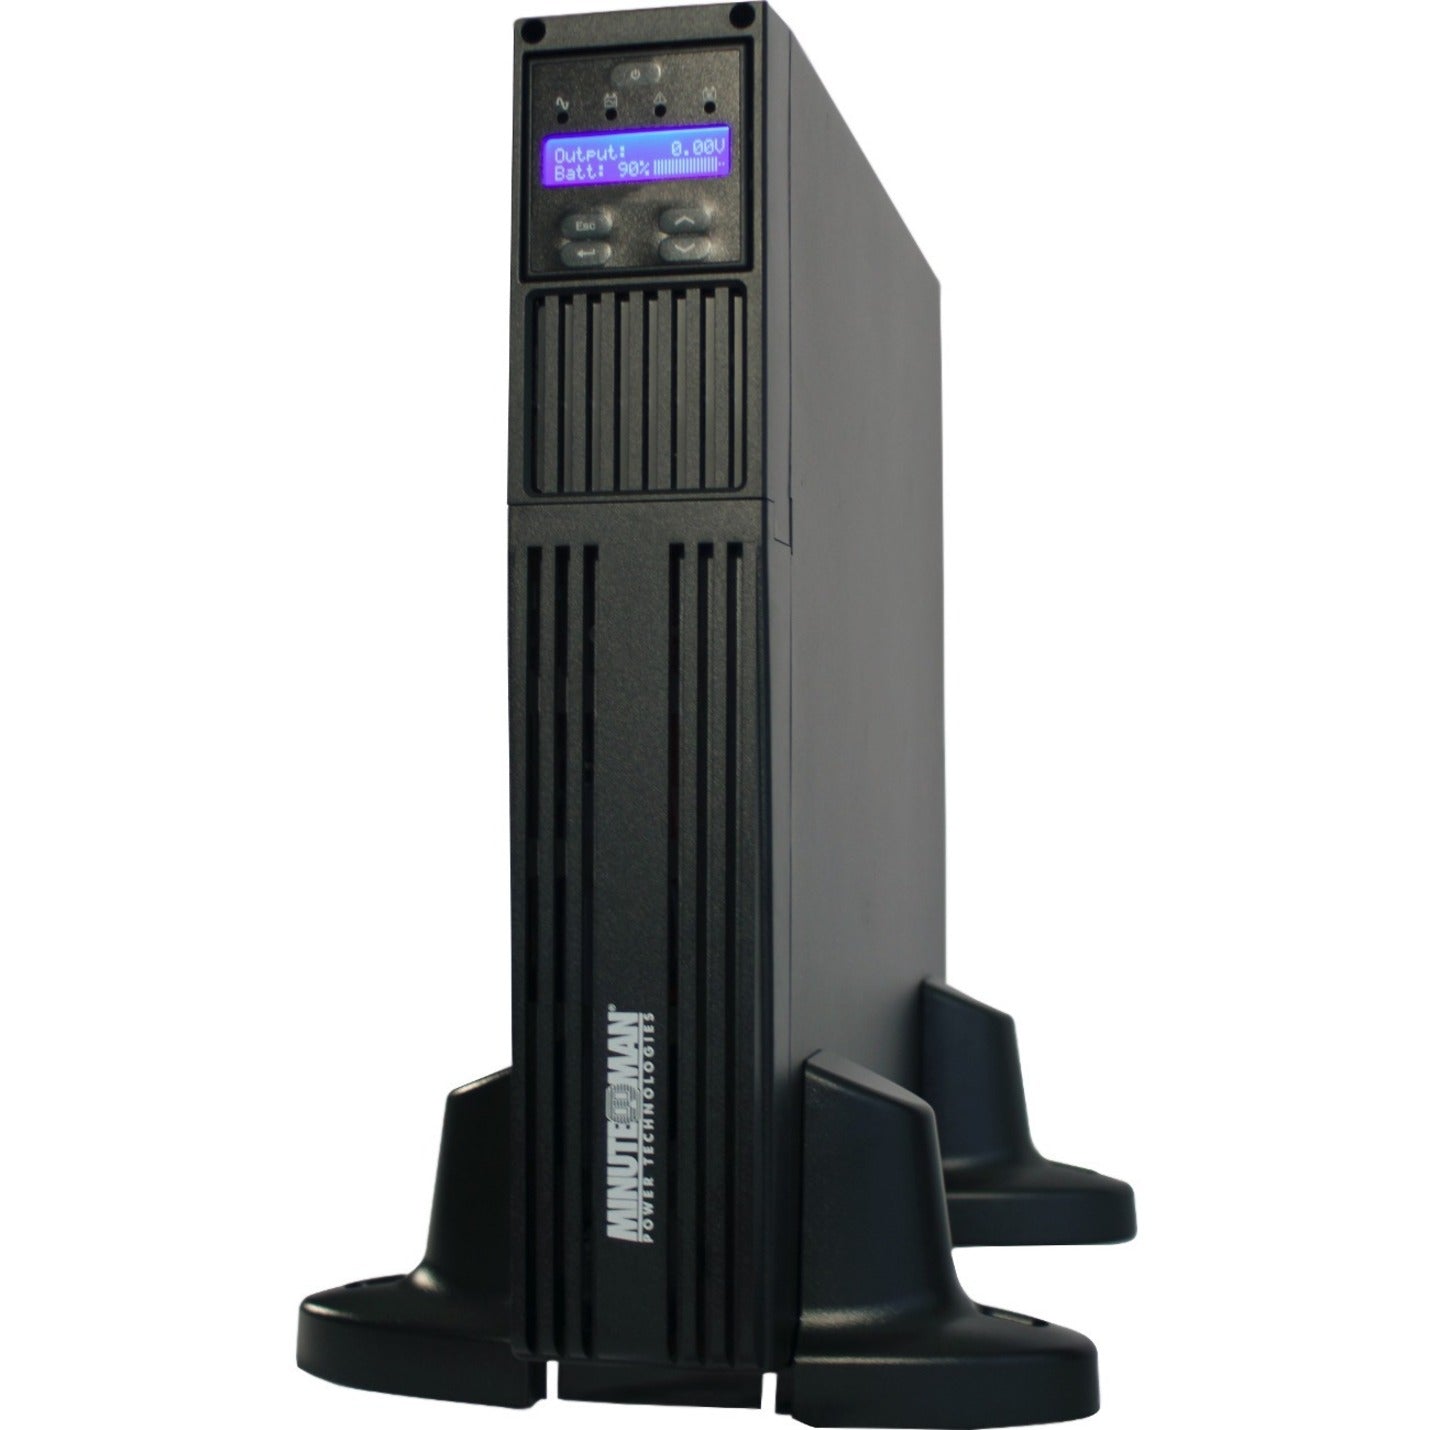 Minuteman بيان تجاري EXR1500RT2U EXR سلسلة الجماهير التفاعلية مقاطعة تكامل مصدر الطاقة غير المنقطعة، 1500 VA/1350 W، 2U راك/جدار/برج، شاشة LCD، تشغيل طويل الأجل